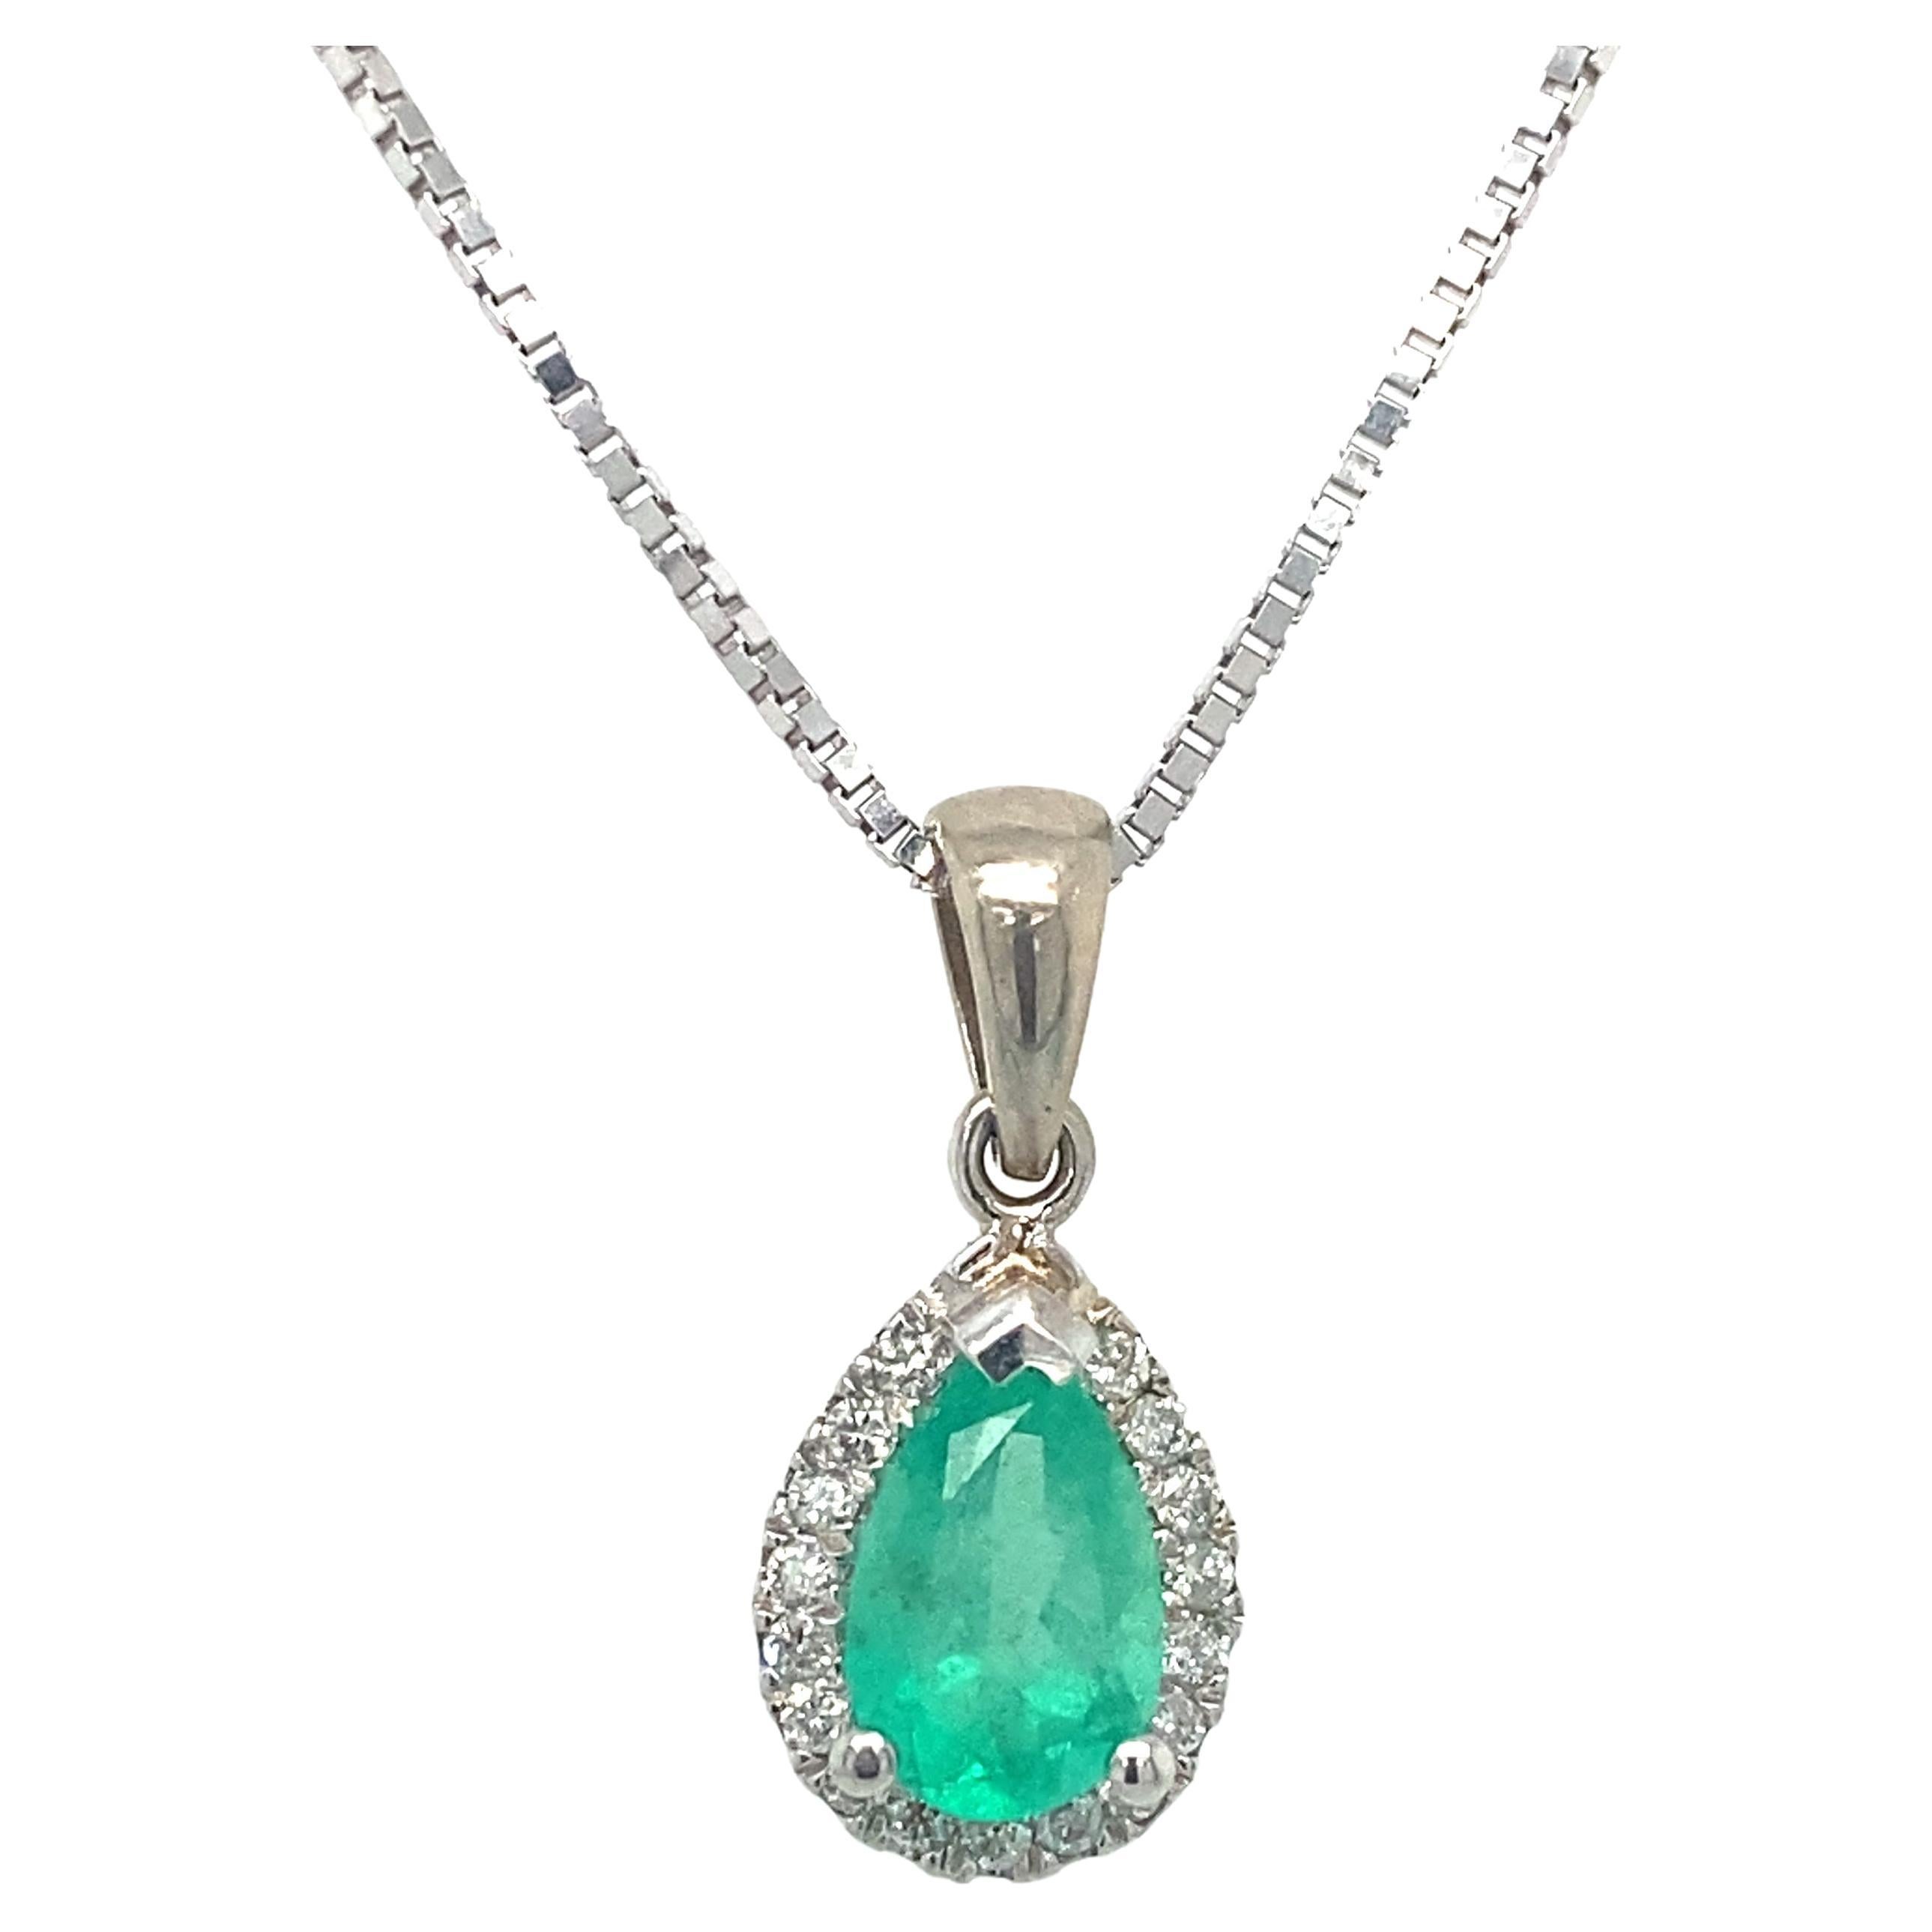 0.88 Carat Pear Cut Emerald and Diamond Pendant Necklace in 14 Karat White Gold